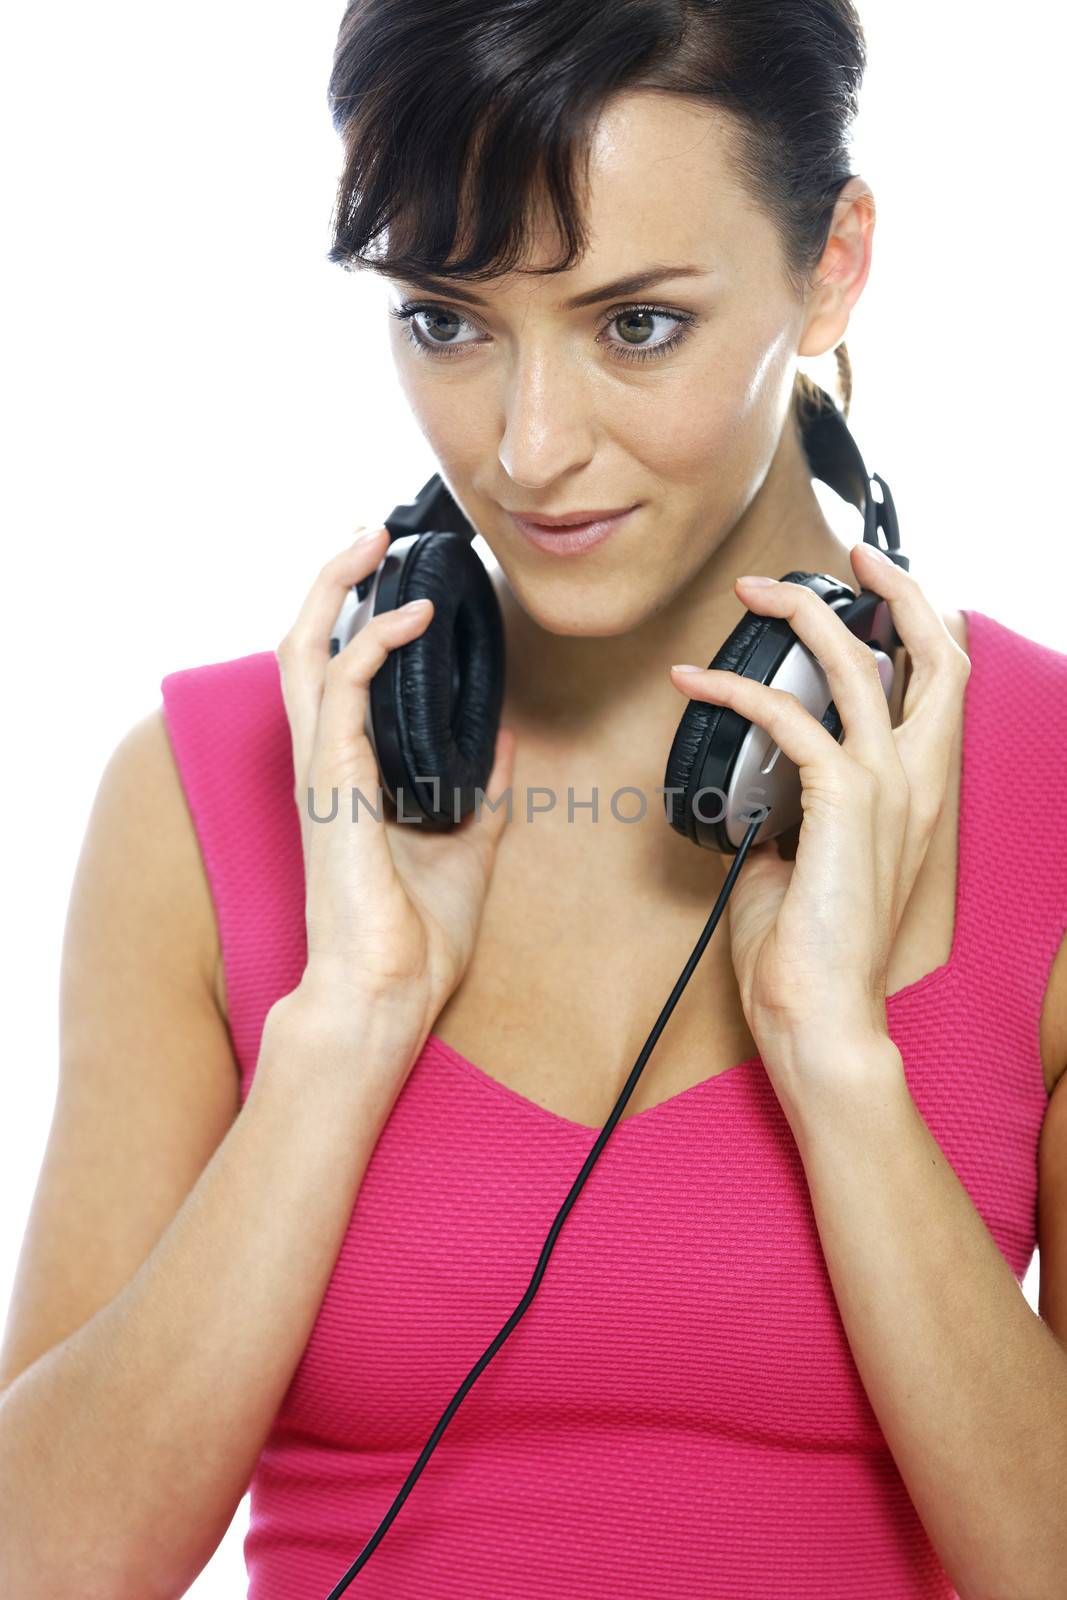 Woman with headphones by studiofi